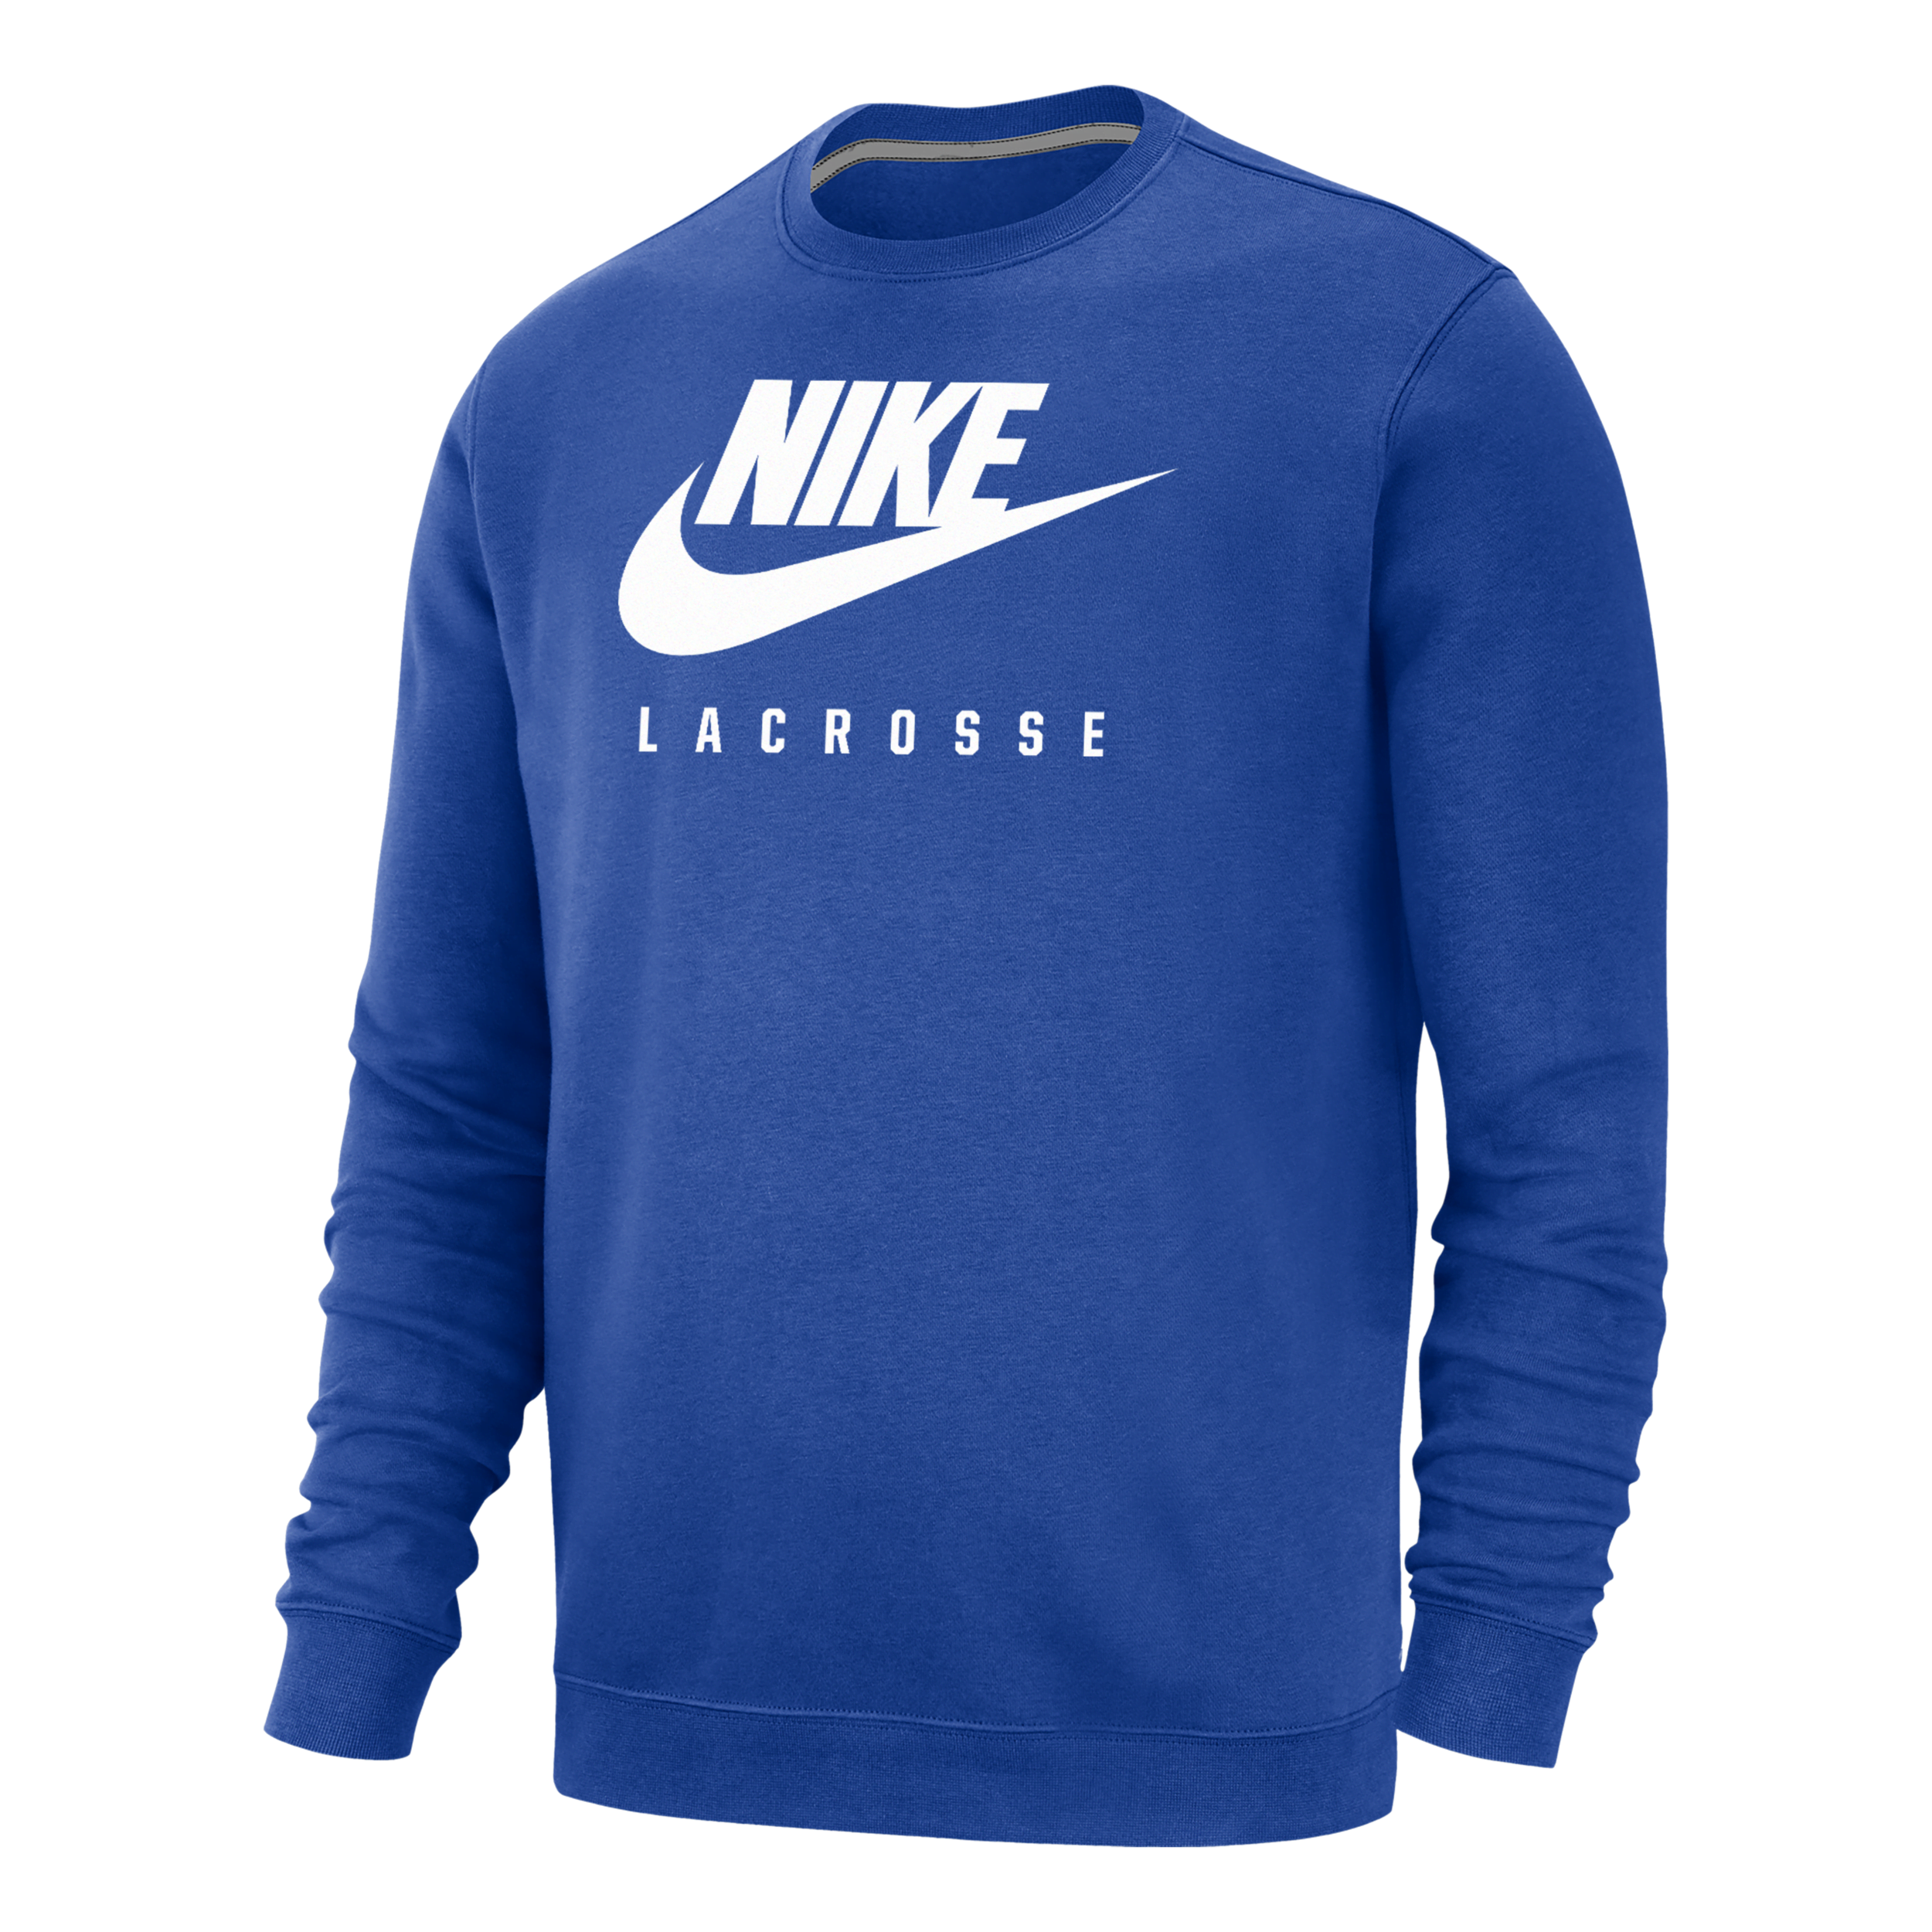 Nike Men's Swoosh Lacrosse Crew-neck Sweatshirt In Blue